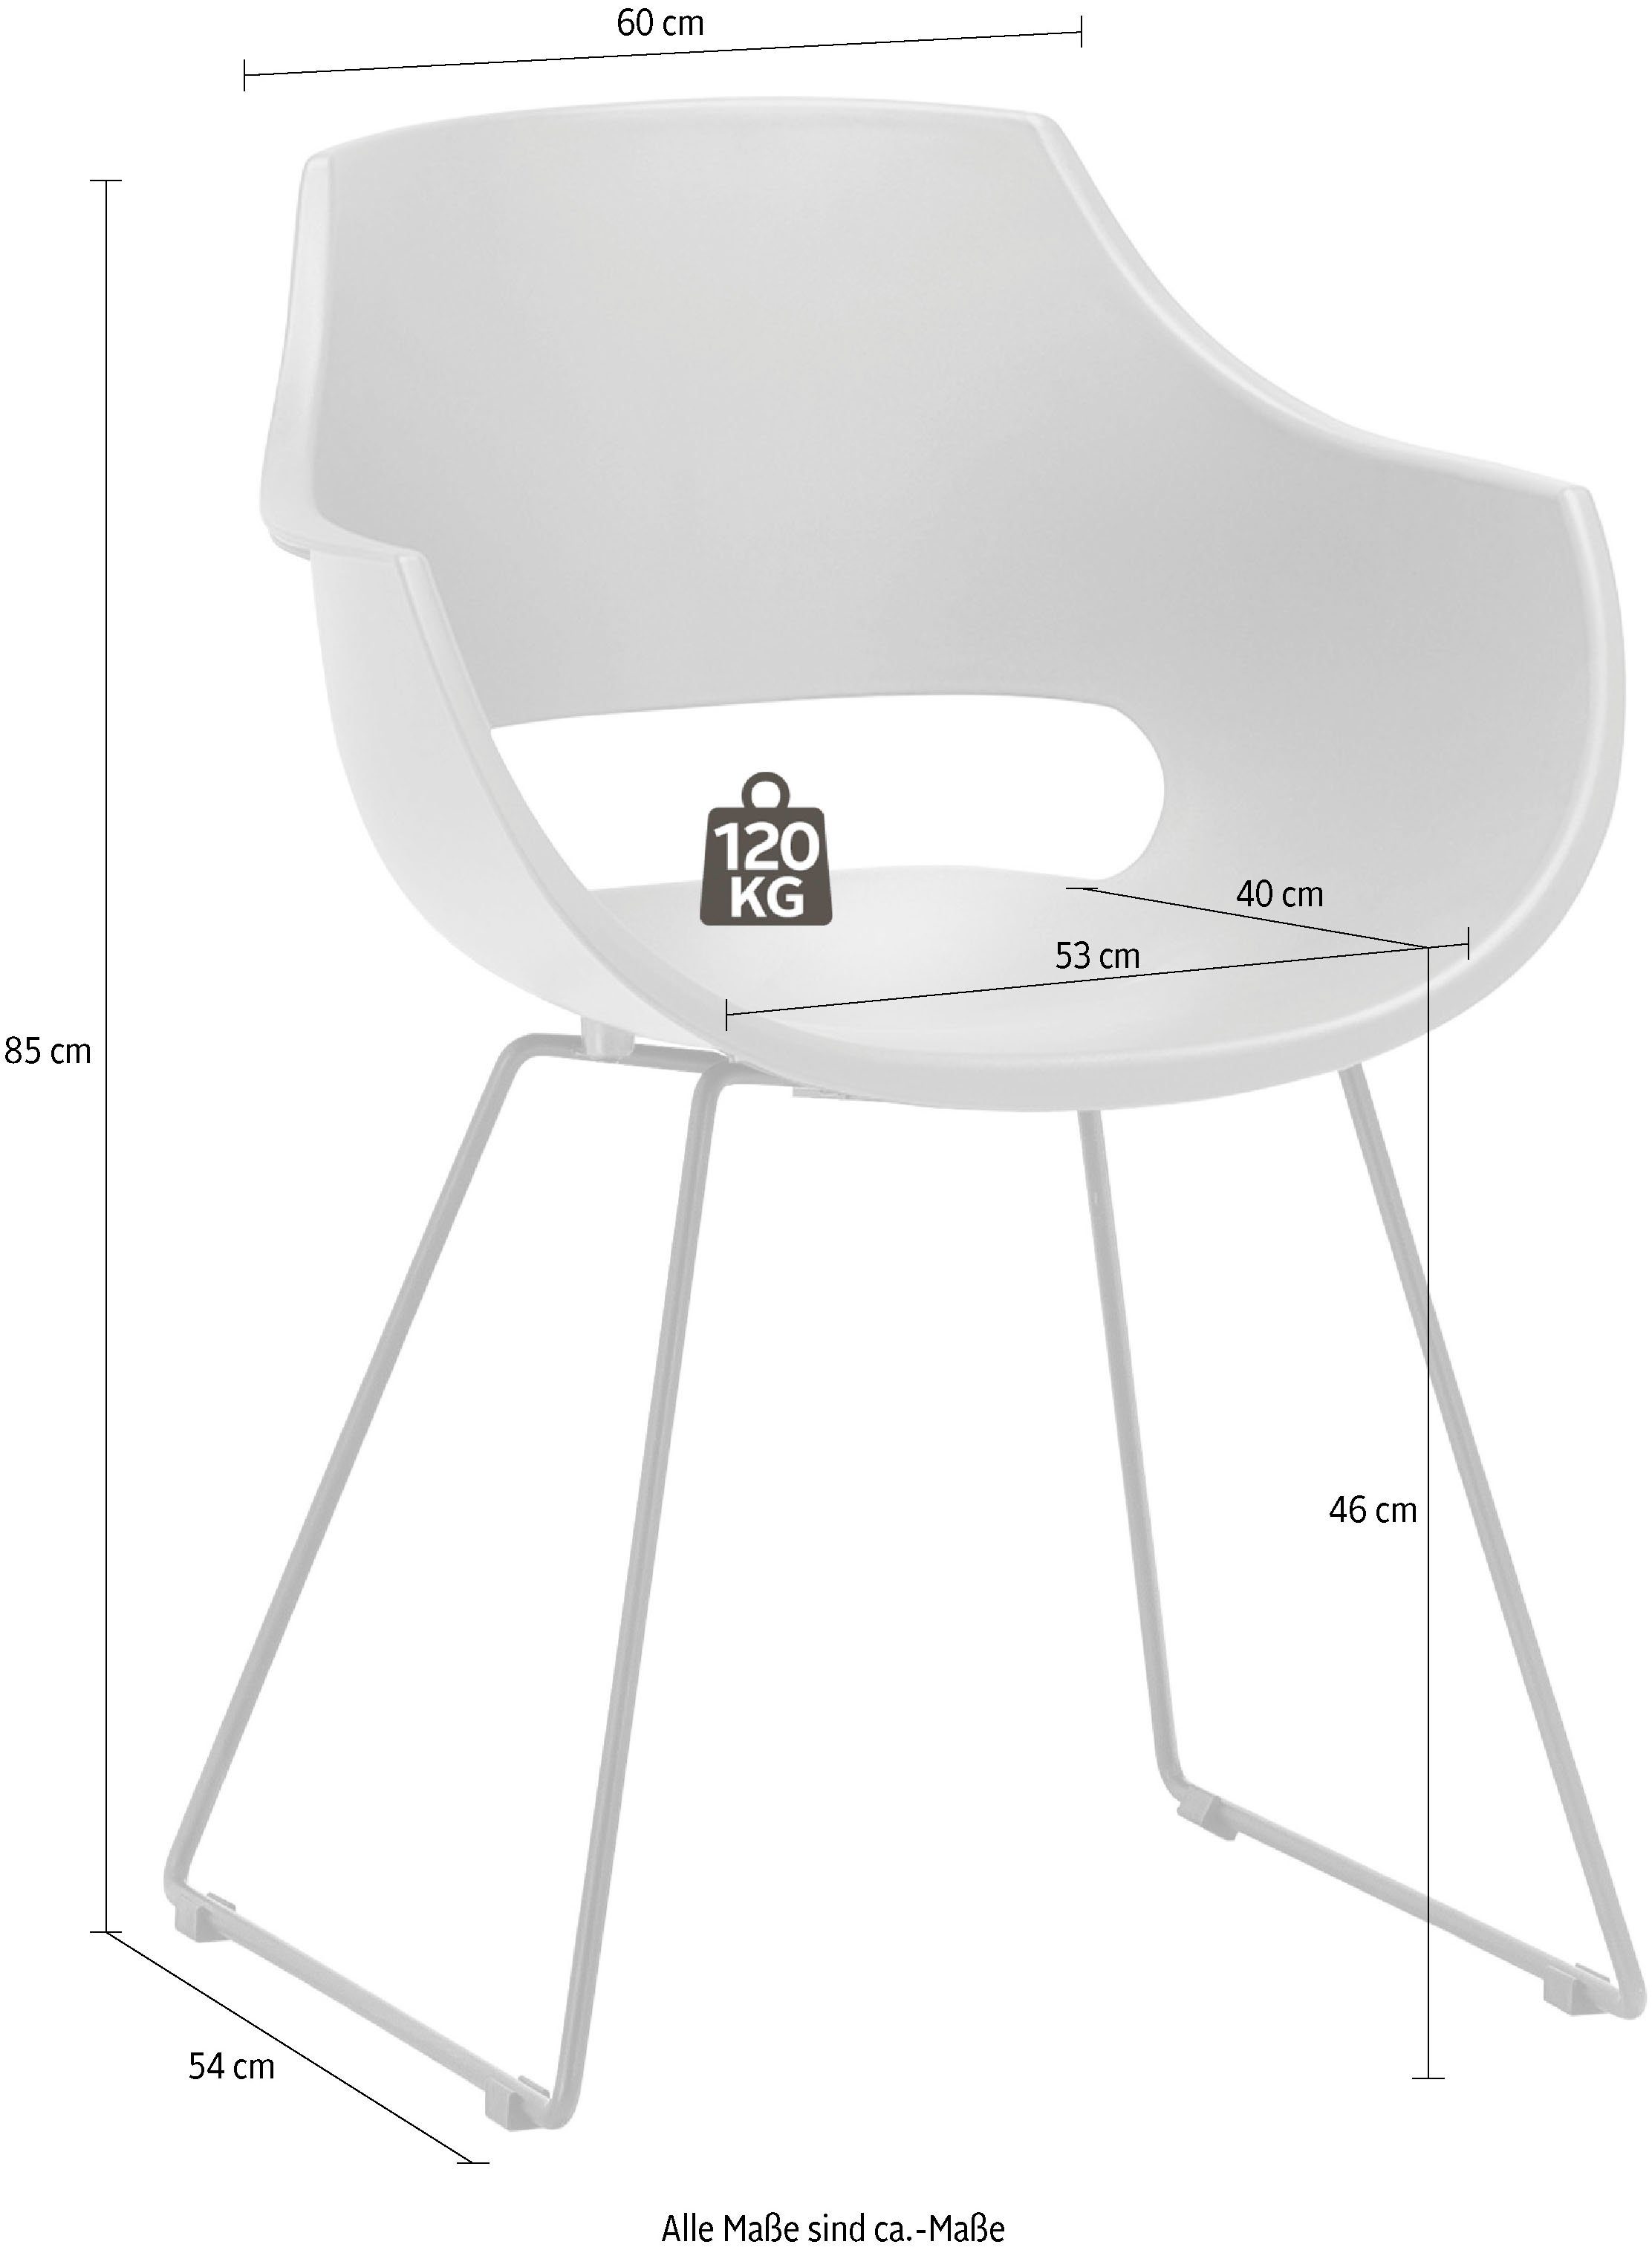 MCA furniture Schalenstuhl Kg | Rockville Grün St), Stuhl belastbar bis 120 Grün 4 (Set